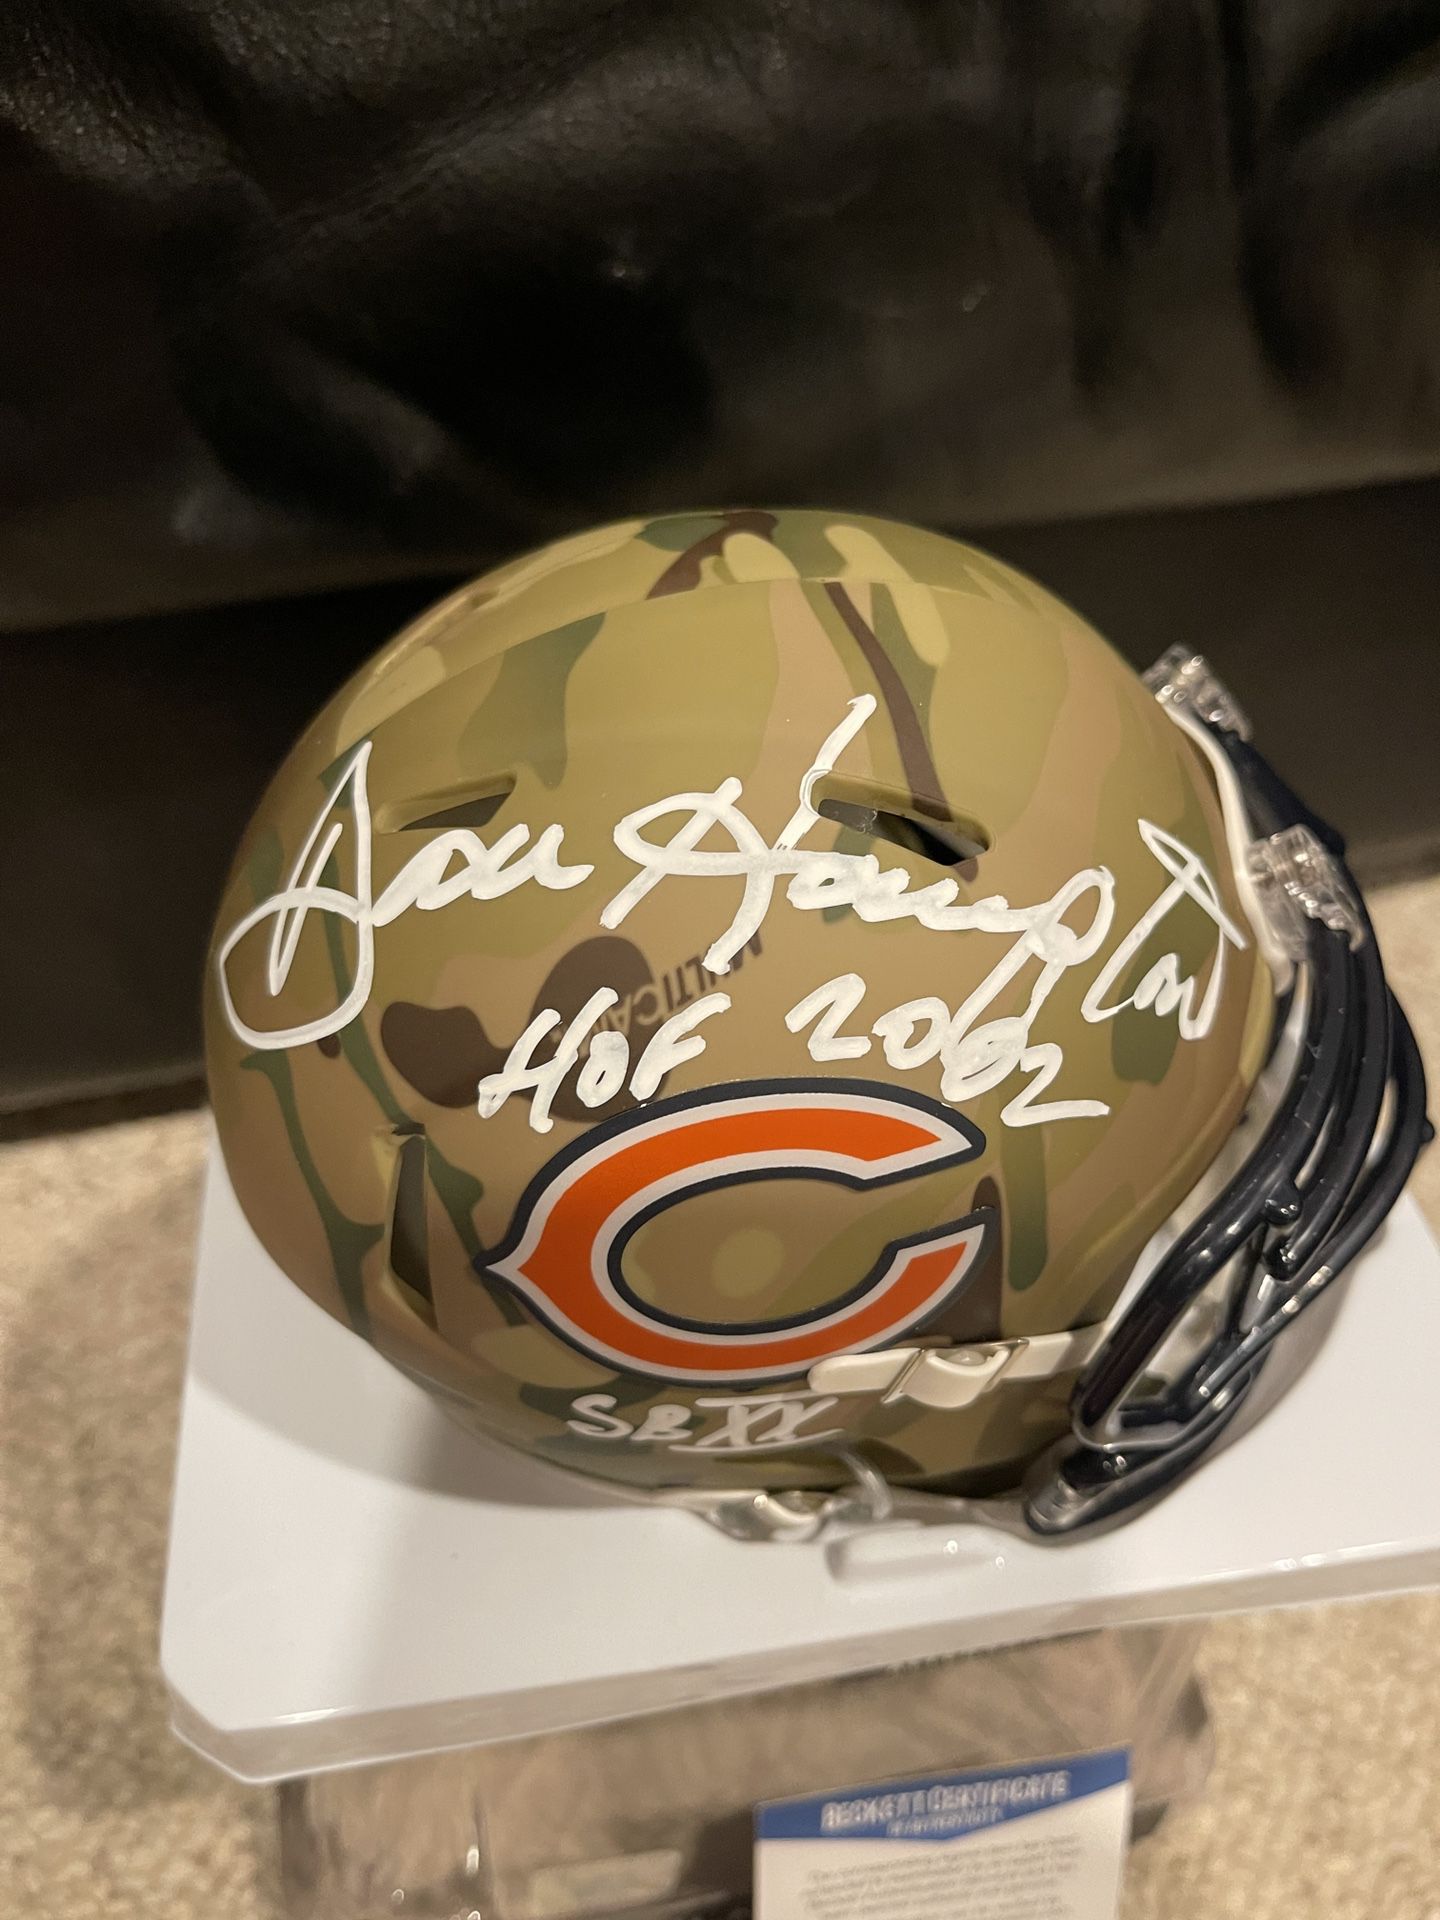 Dan Hampton Signed Bears Camp Helmet 